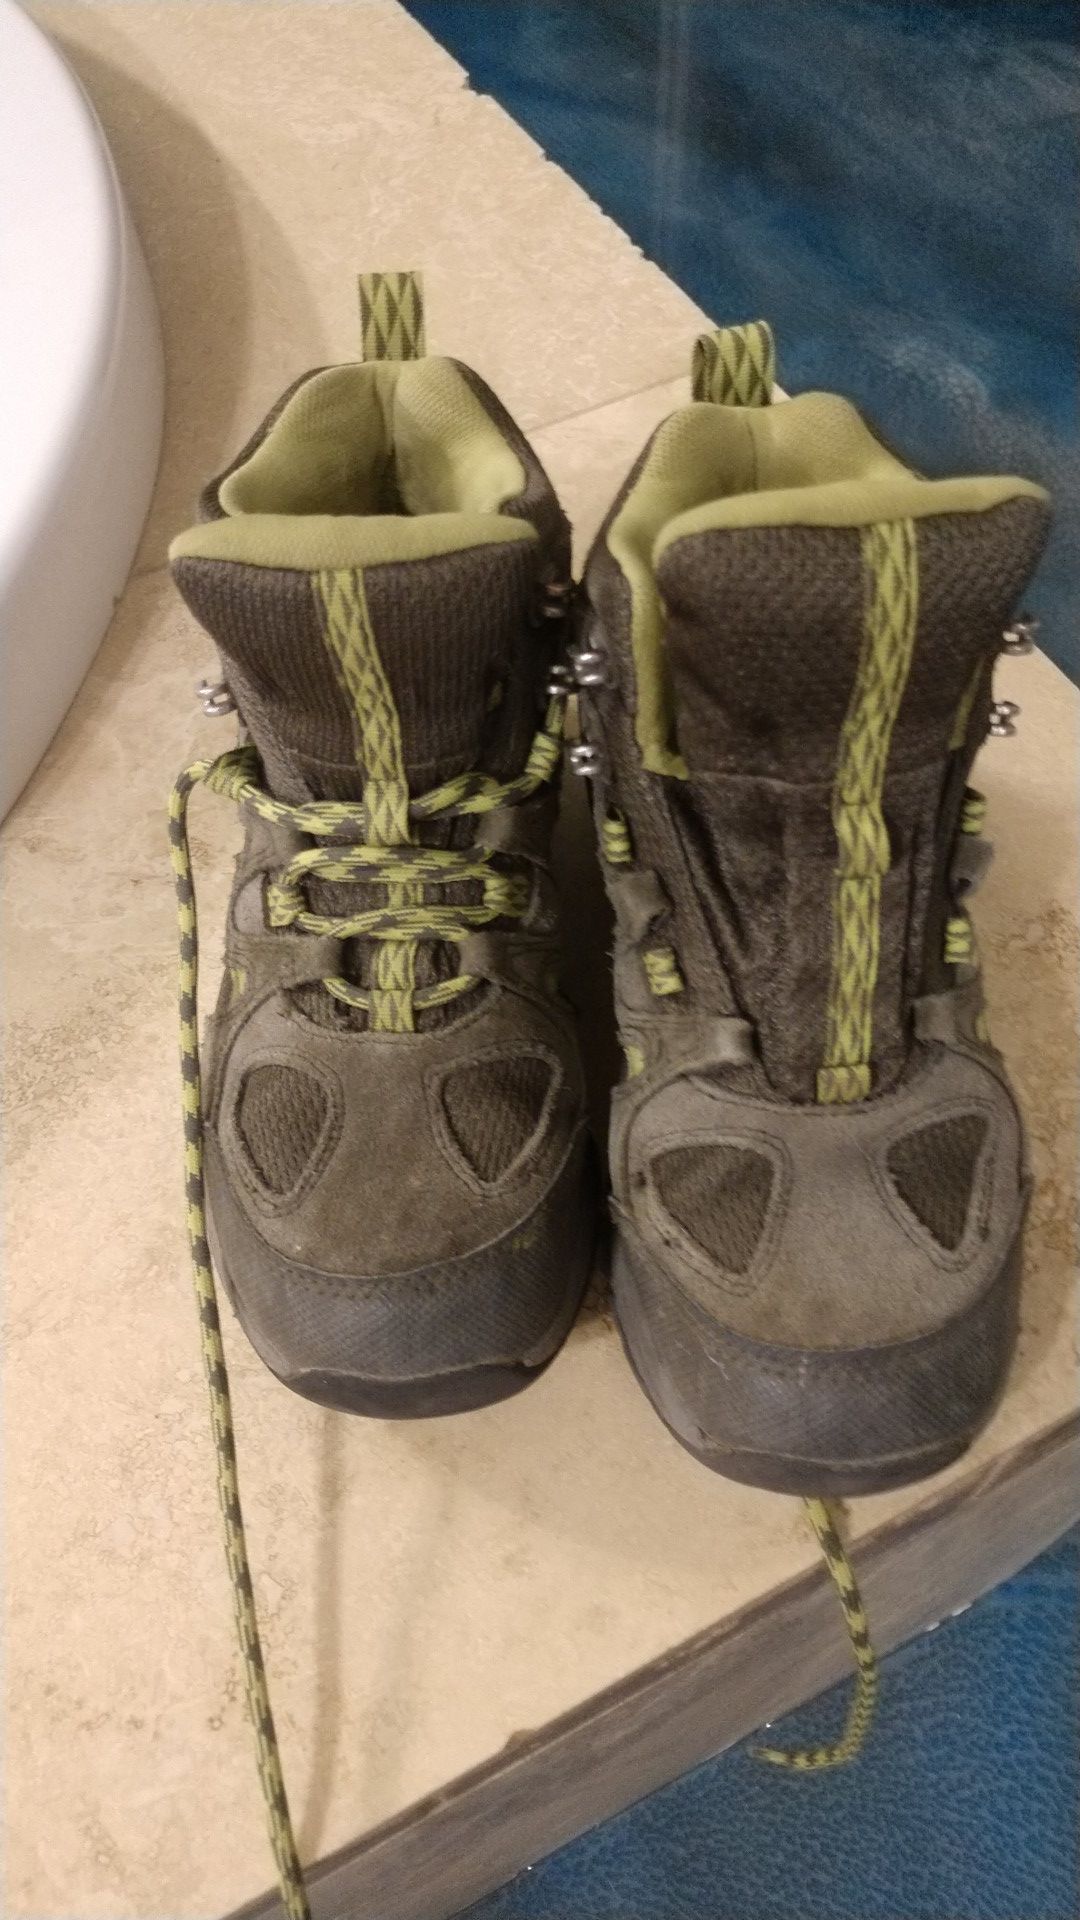 LL Bean Tek 2.5 hiking boots size 3